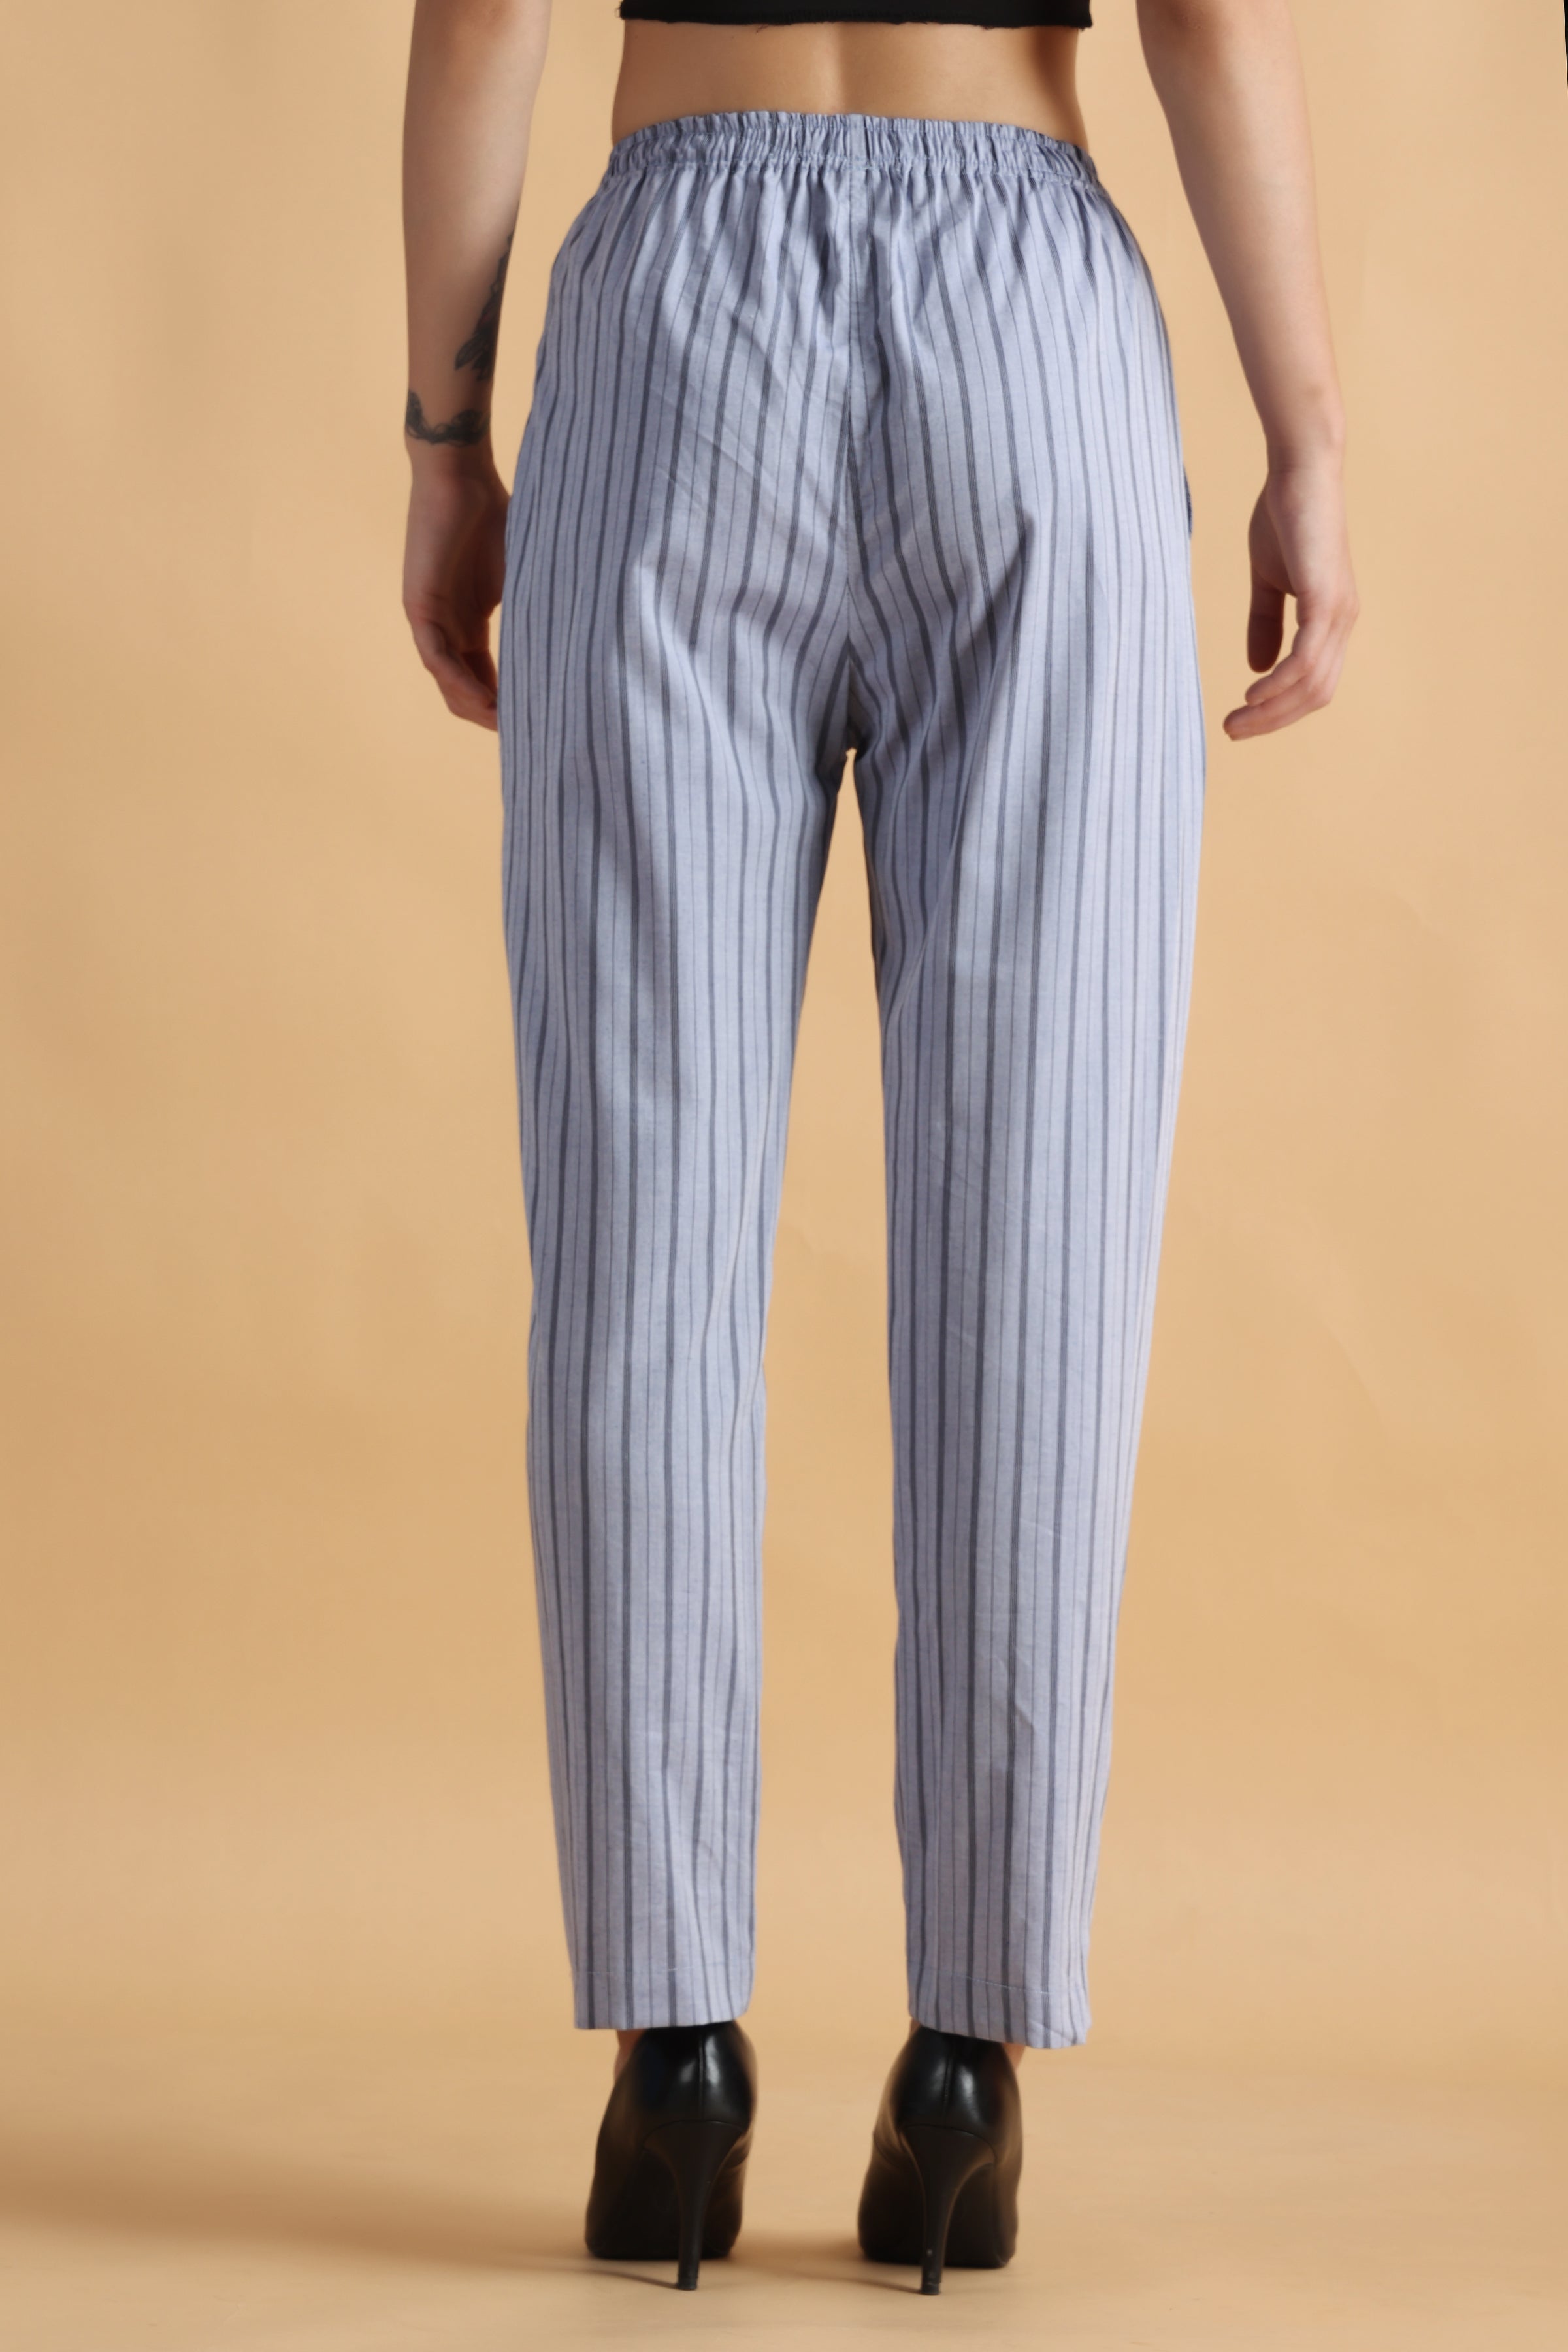 Loddon Stripe Light Blue Pants (USD)